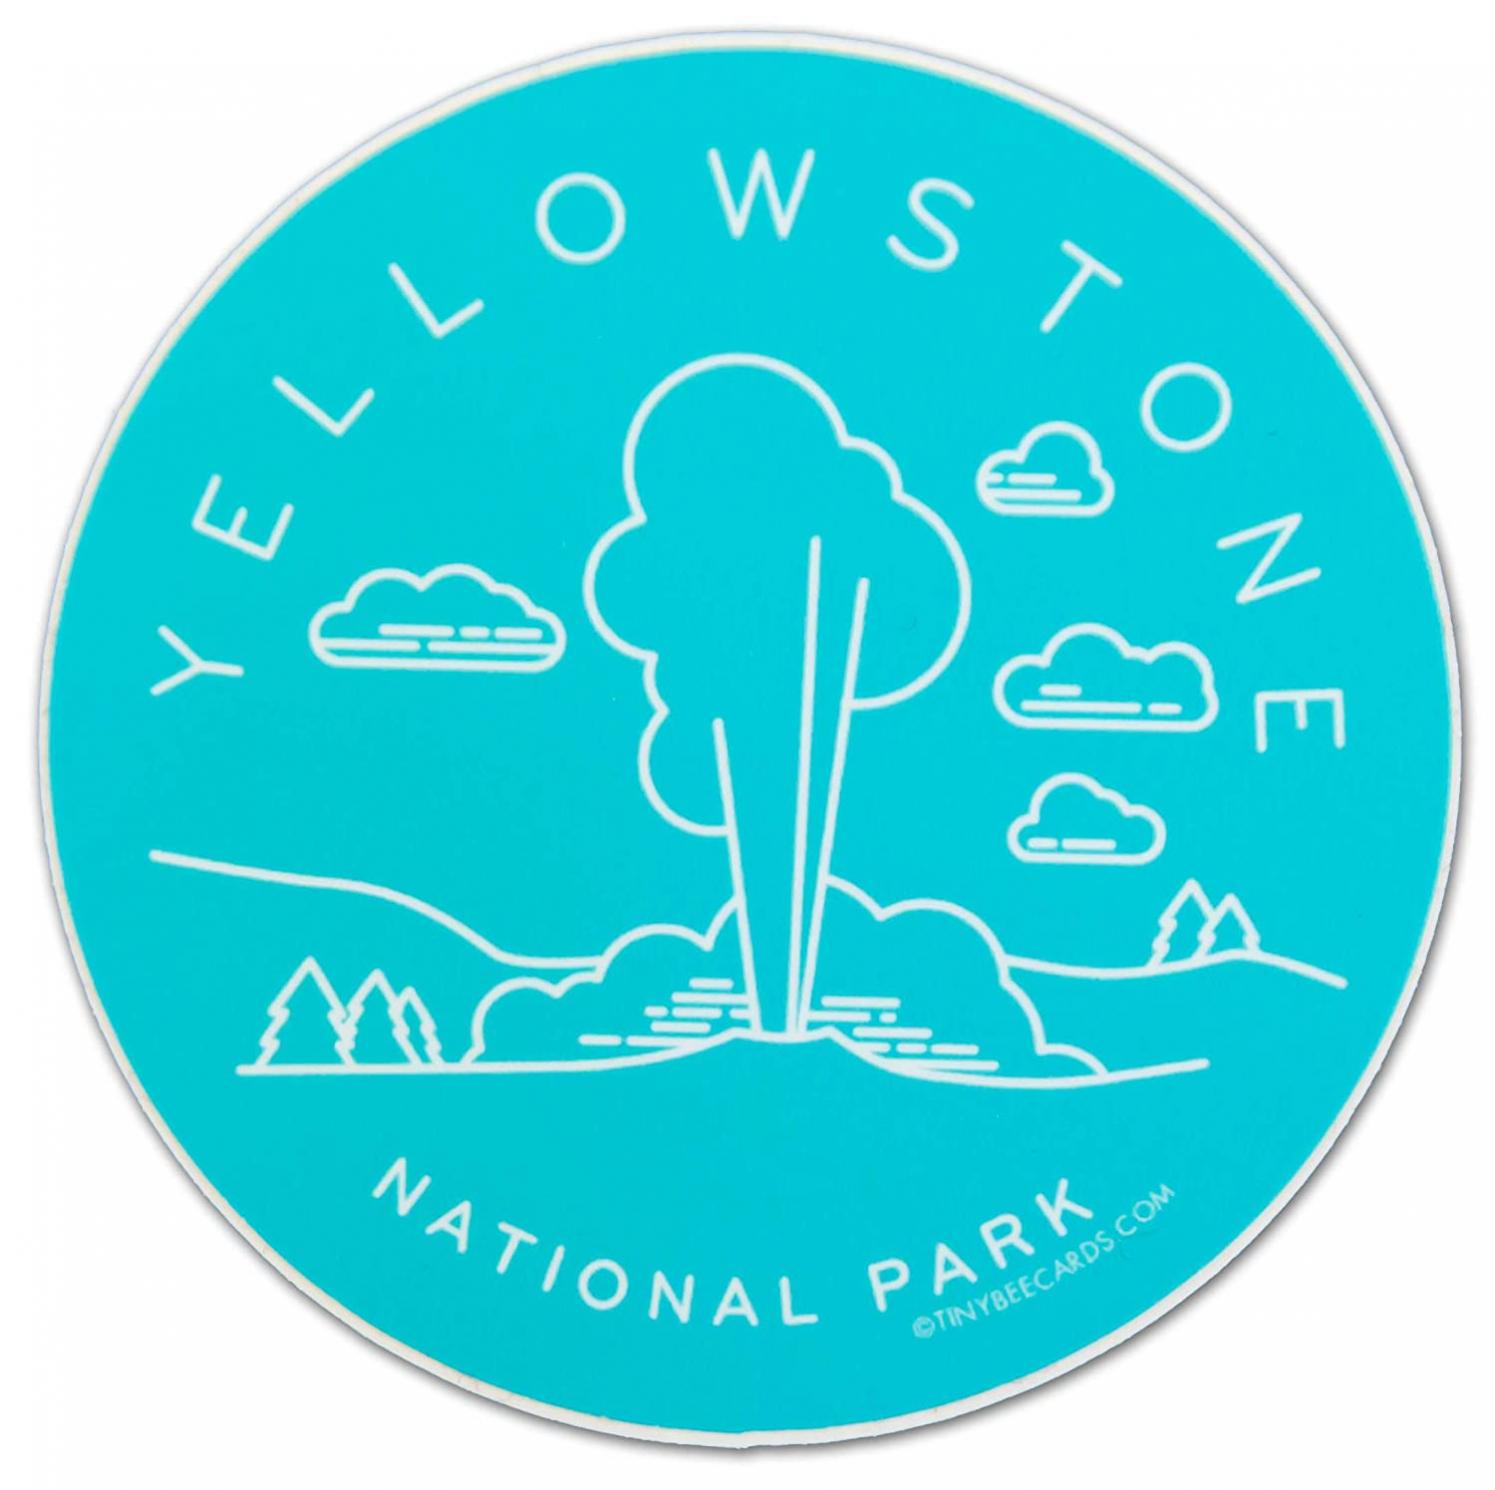 Yellowstone National Park Sticker - Dishwasher Safe Nature Decal 3"x3"